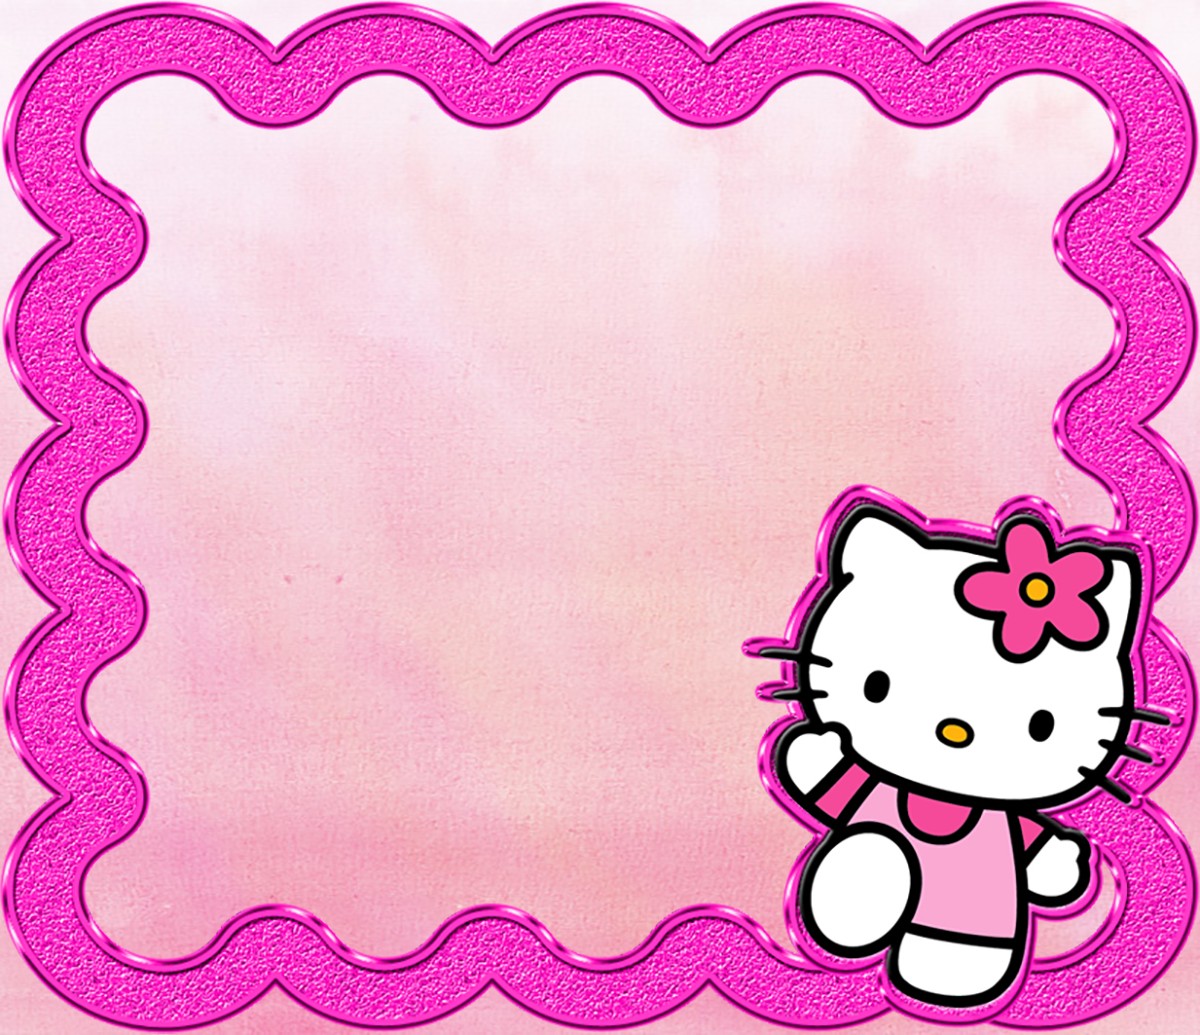 Hello Kitty Free Printable Invitation Templates Invitations Online